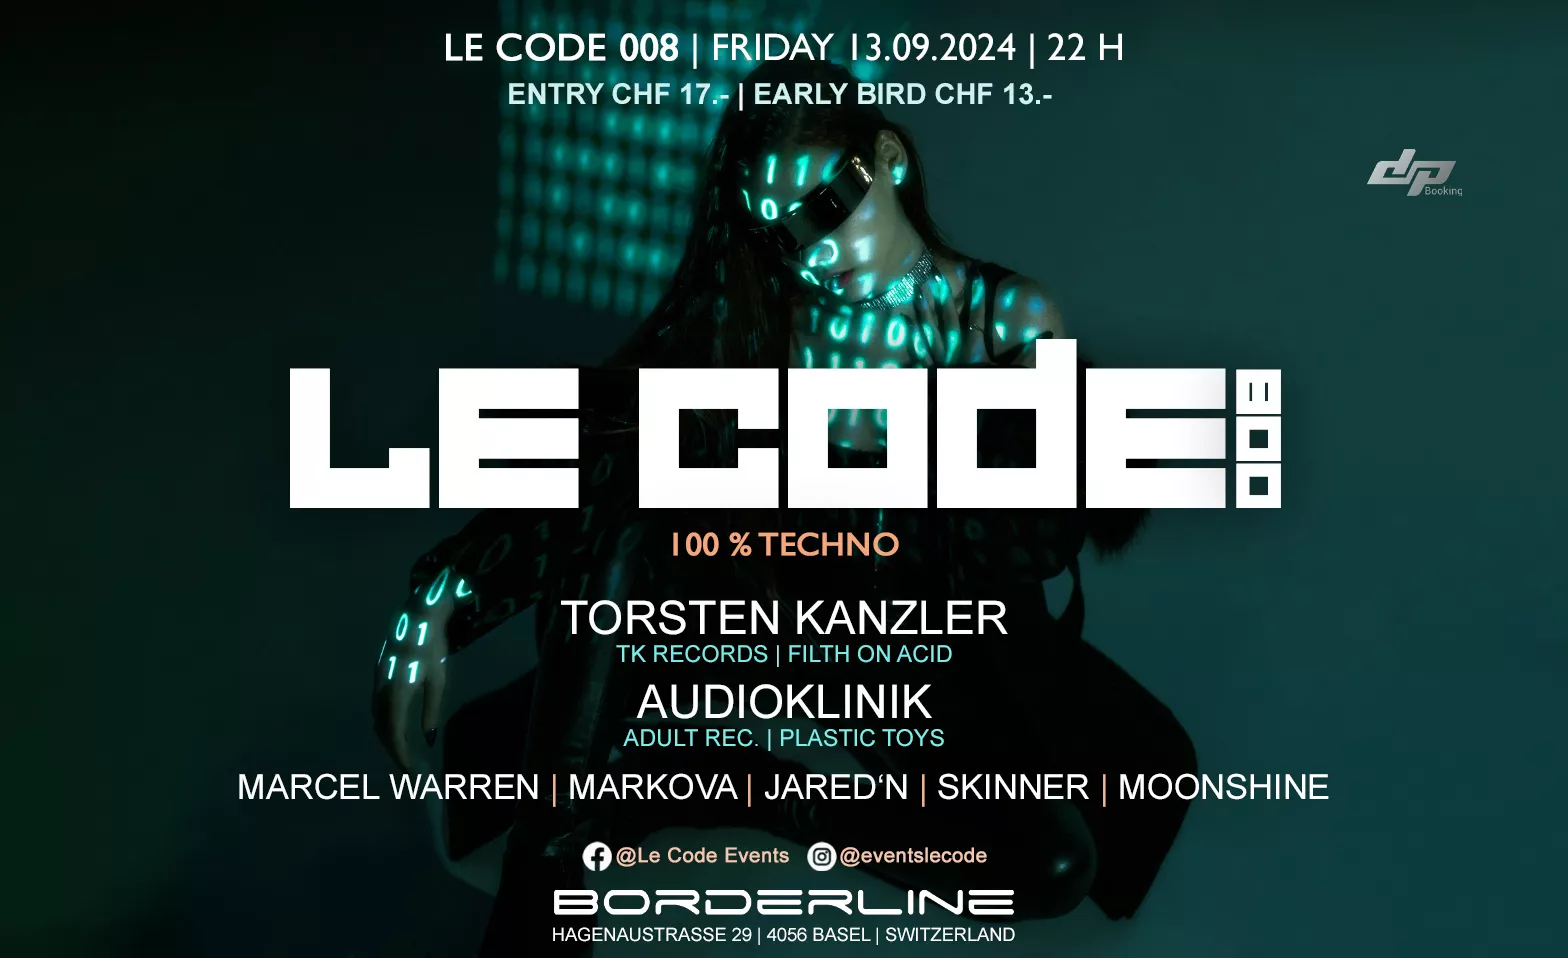 Event-Image for 'LE CODE 008 with TORSTEN KANZLER & AUDIOKLINIK'